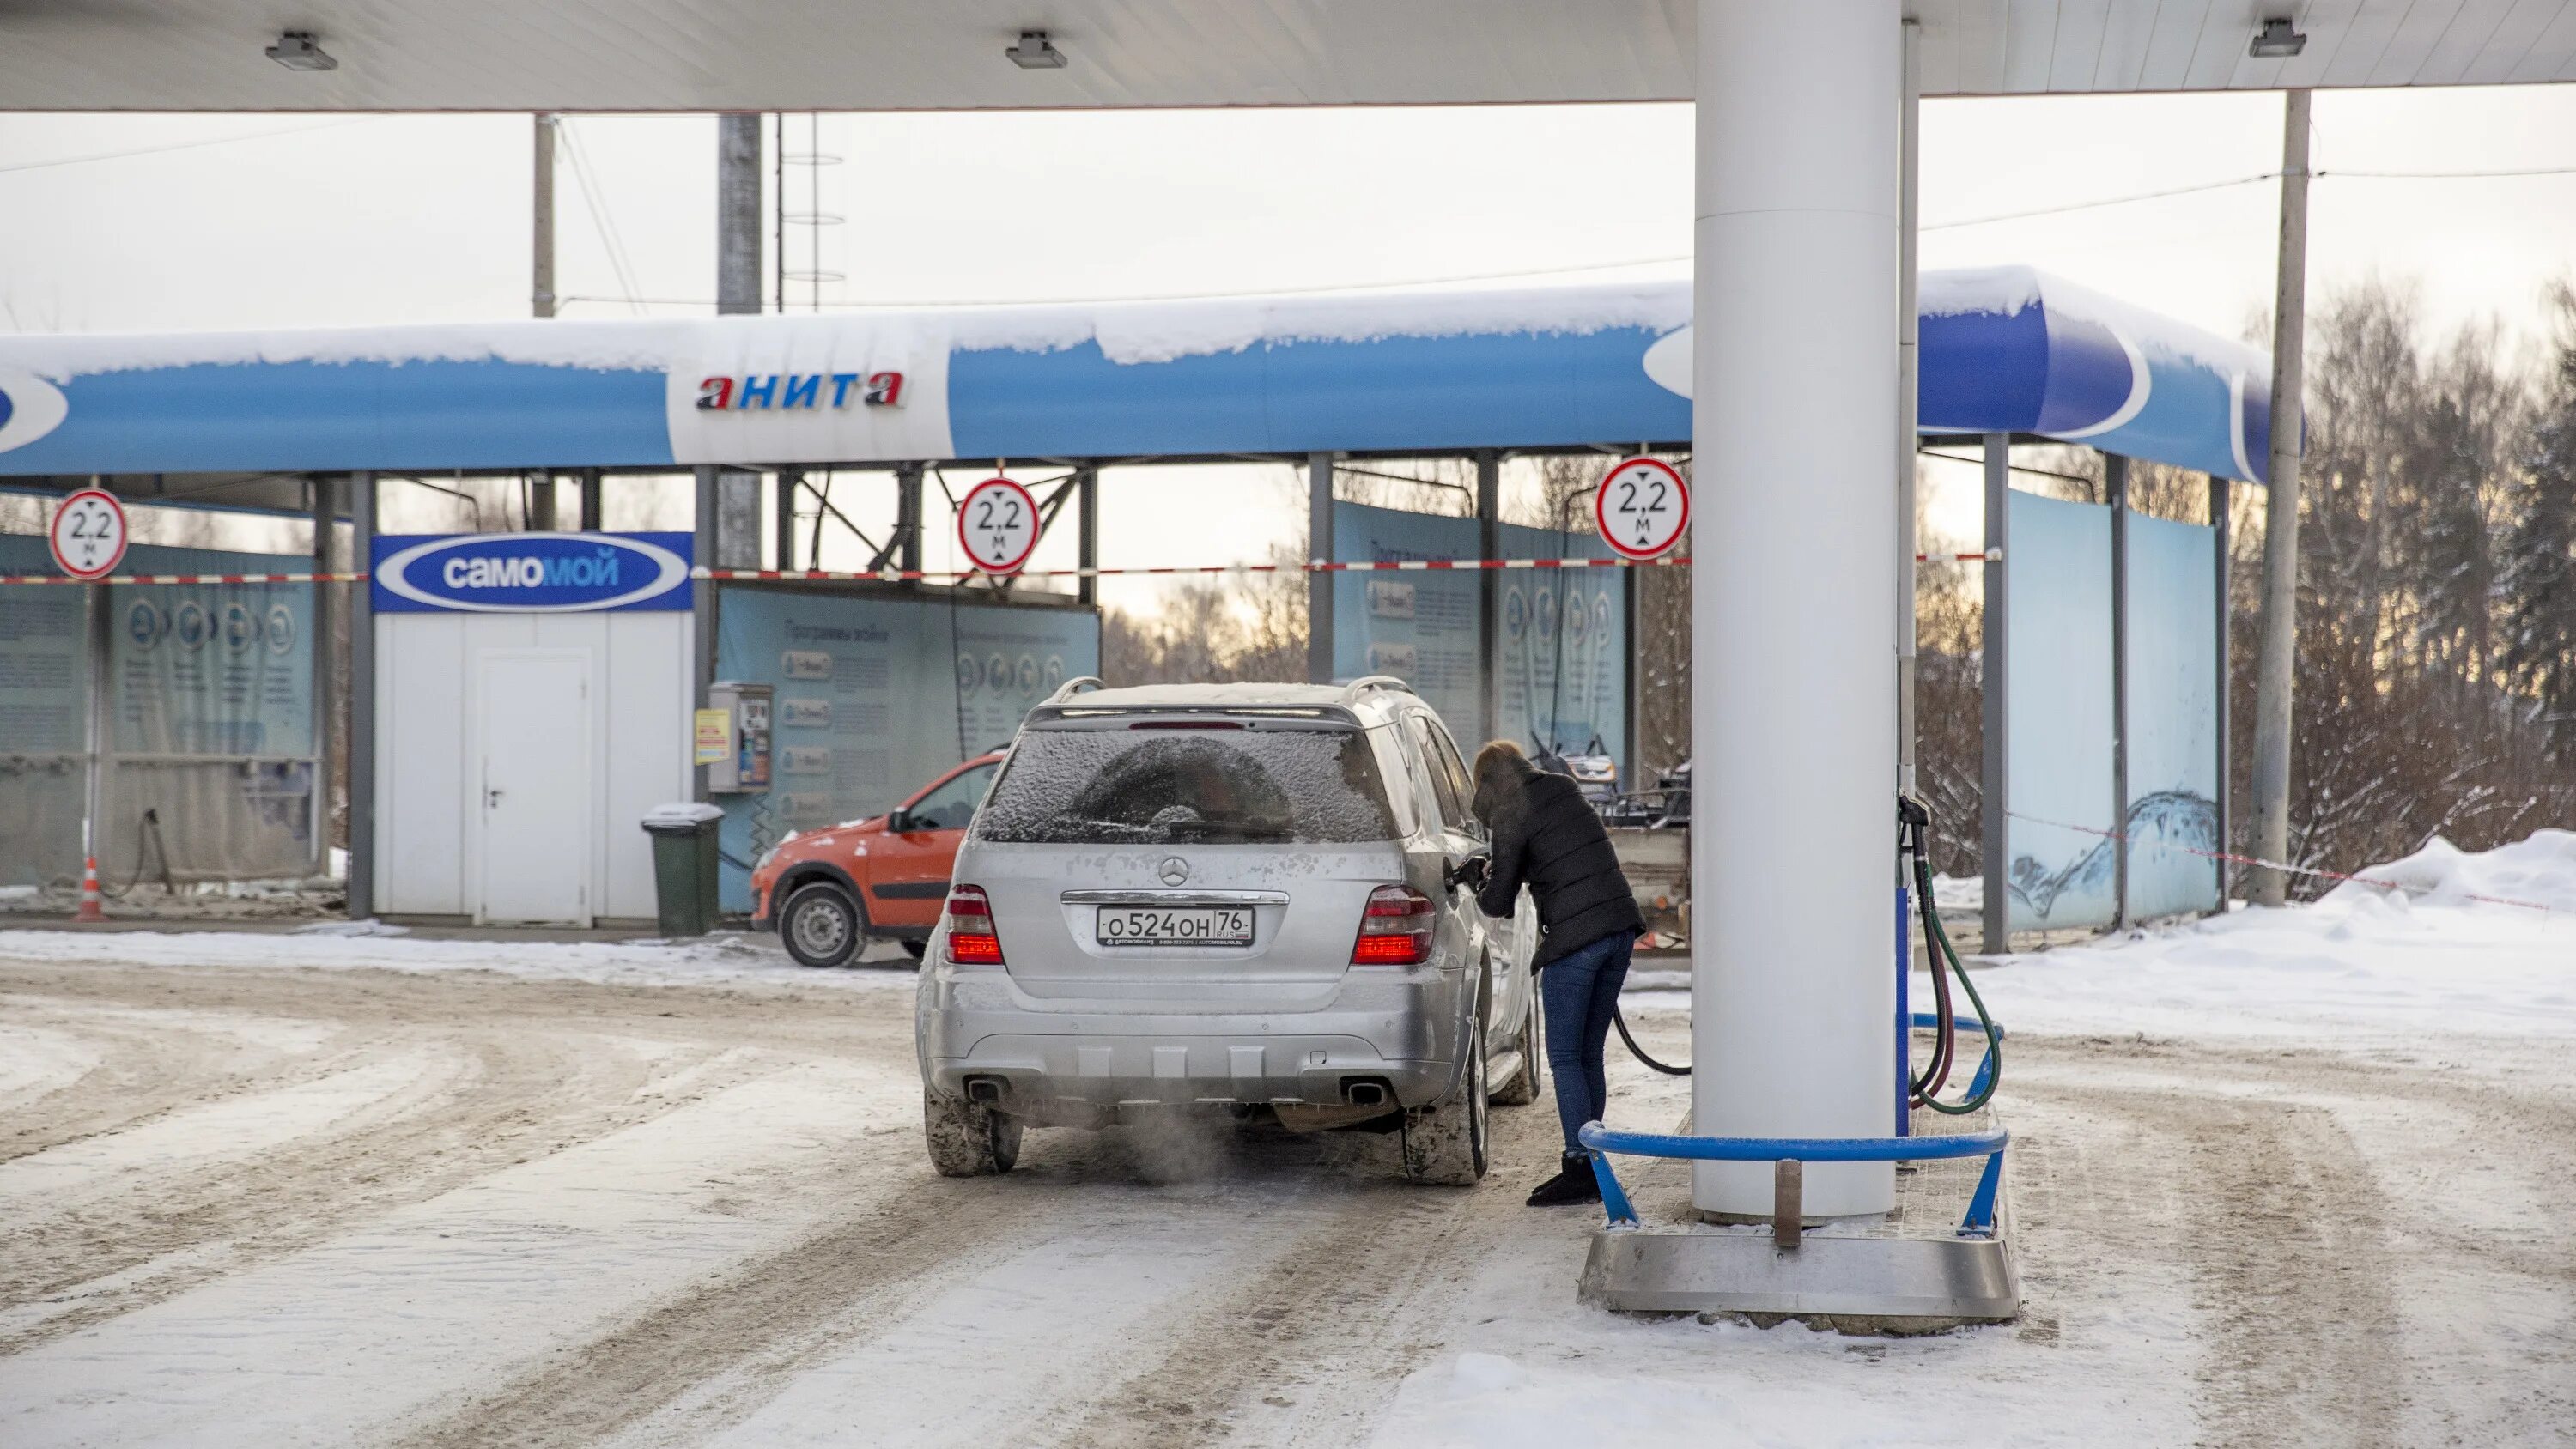 Бензин подорожал сегодня. Автозаправки в Ярославле. Почему подорожал бензин фото. 76 Бензин. 76 Бензин цена.